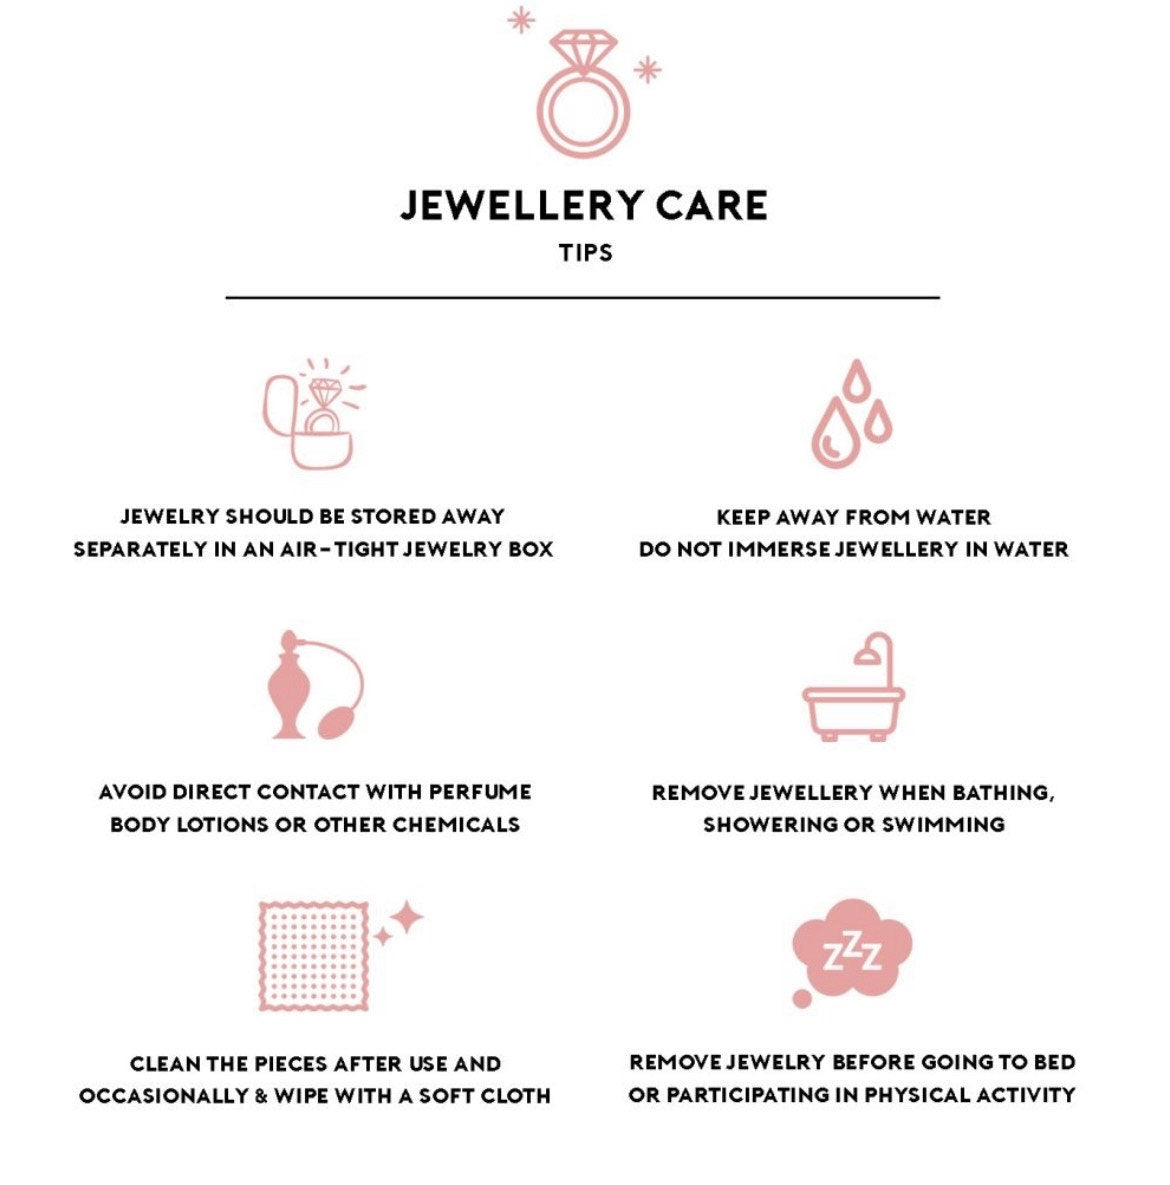 Natural Handmade 1.15 Carat Trillion Shape Diamond, Black Diamond For Customization Ring, Earrings And Necklace